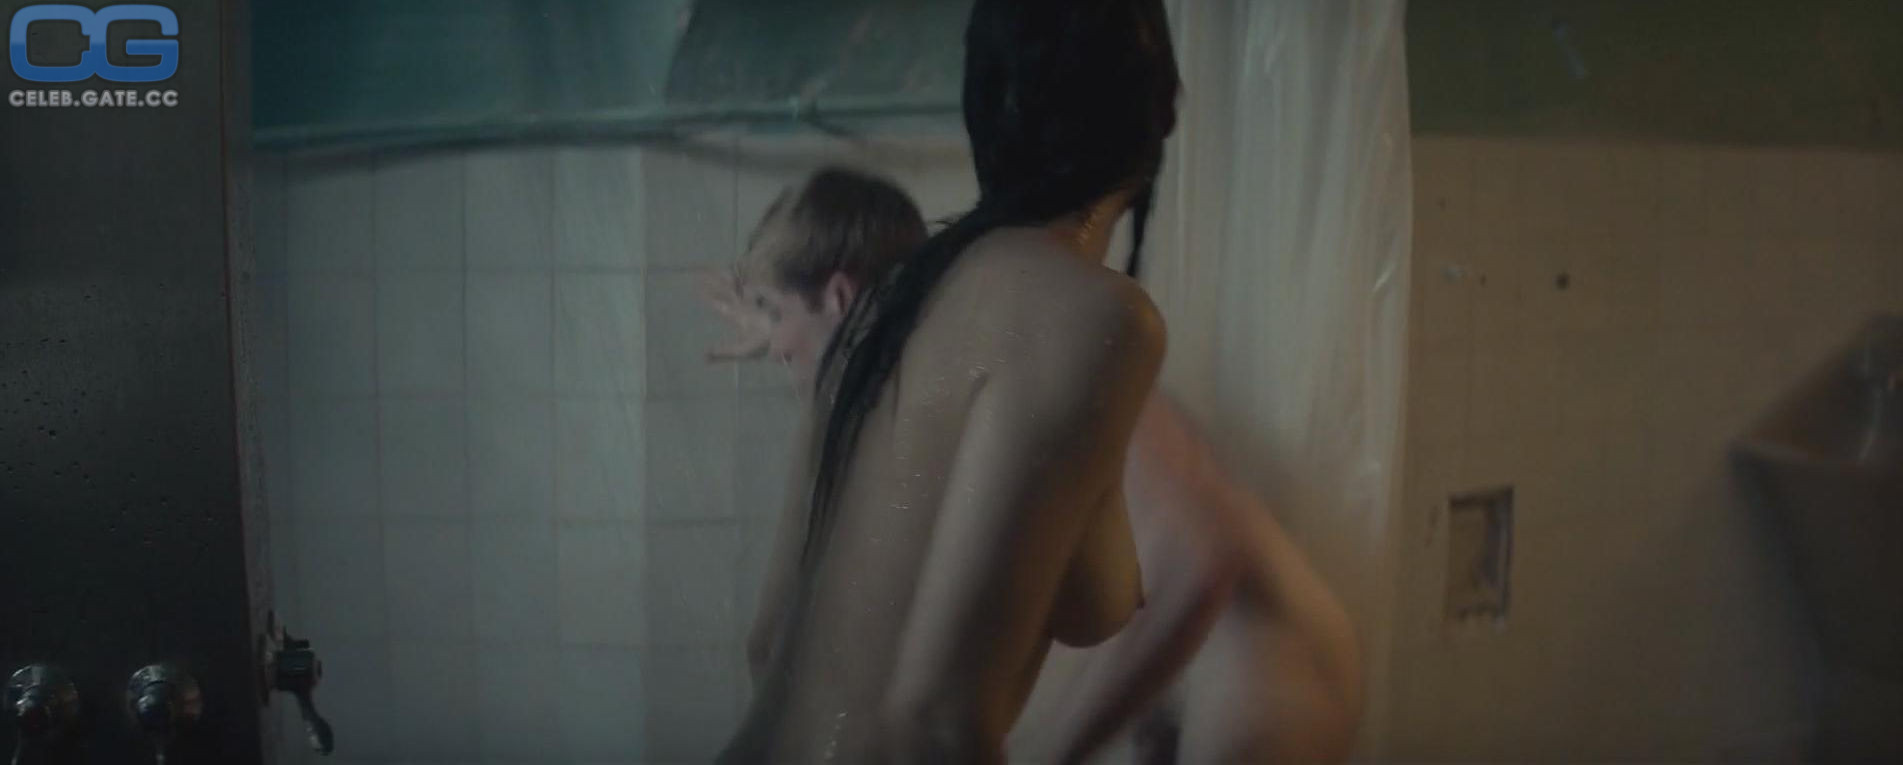 Jennifer Lawrence nude scene